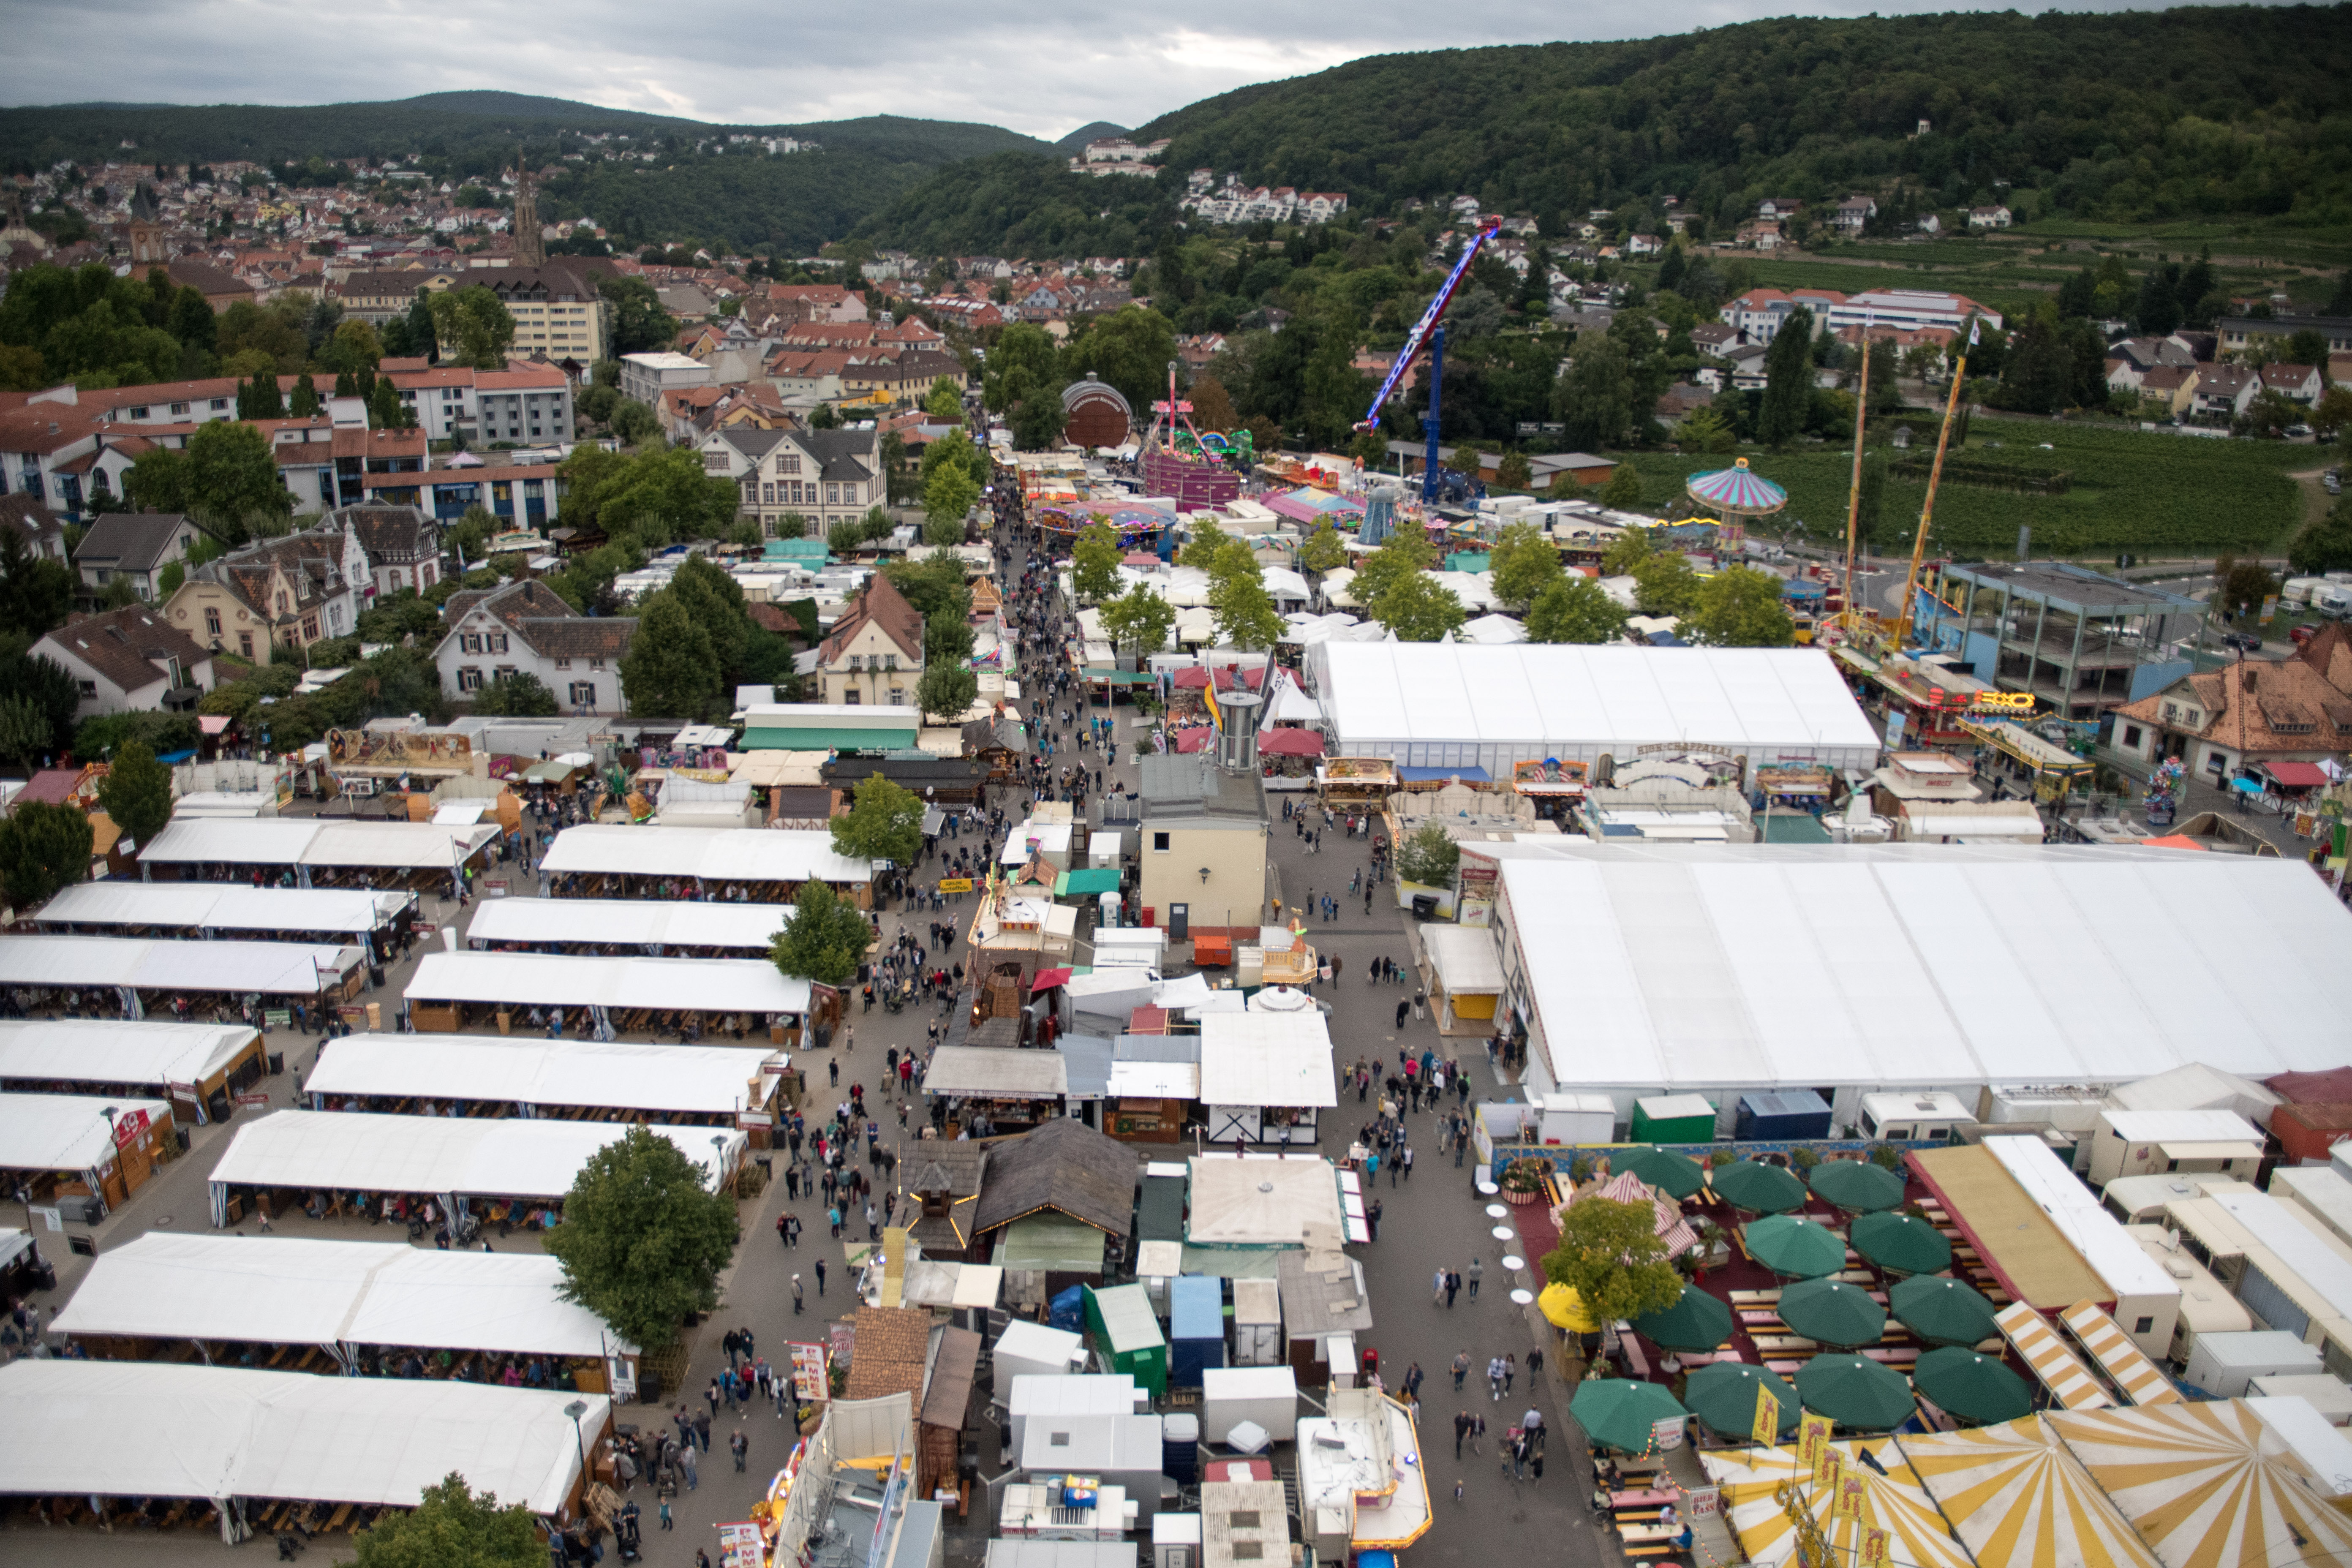 Aerial view of Bad Dürkheim Wine Fest.